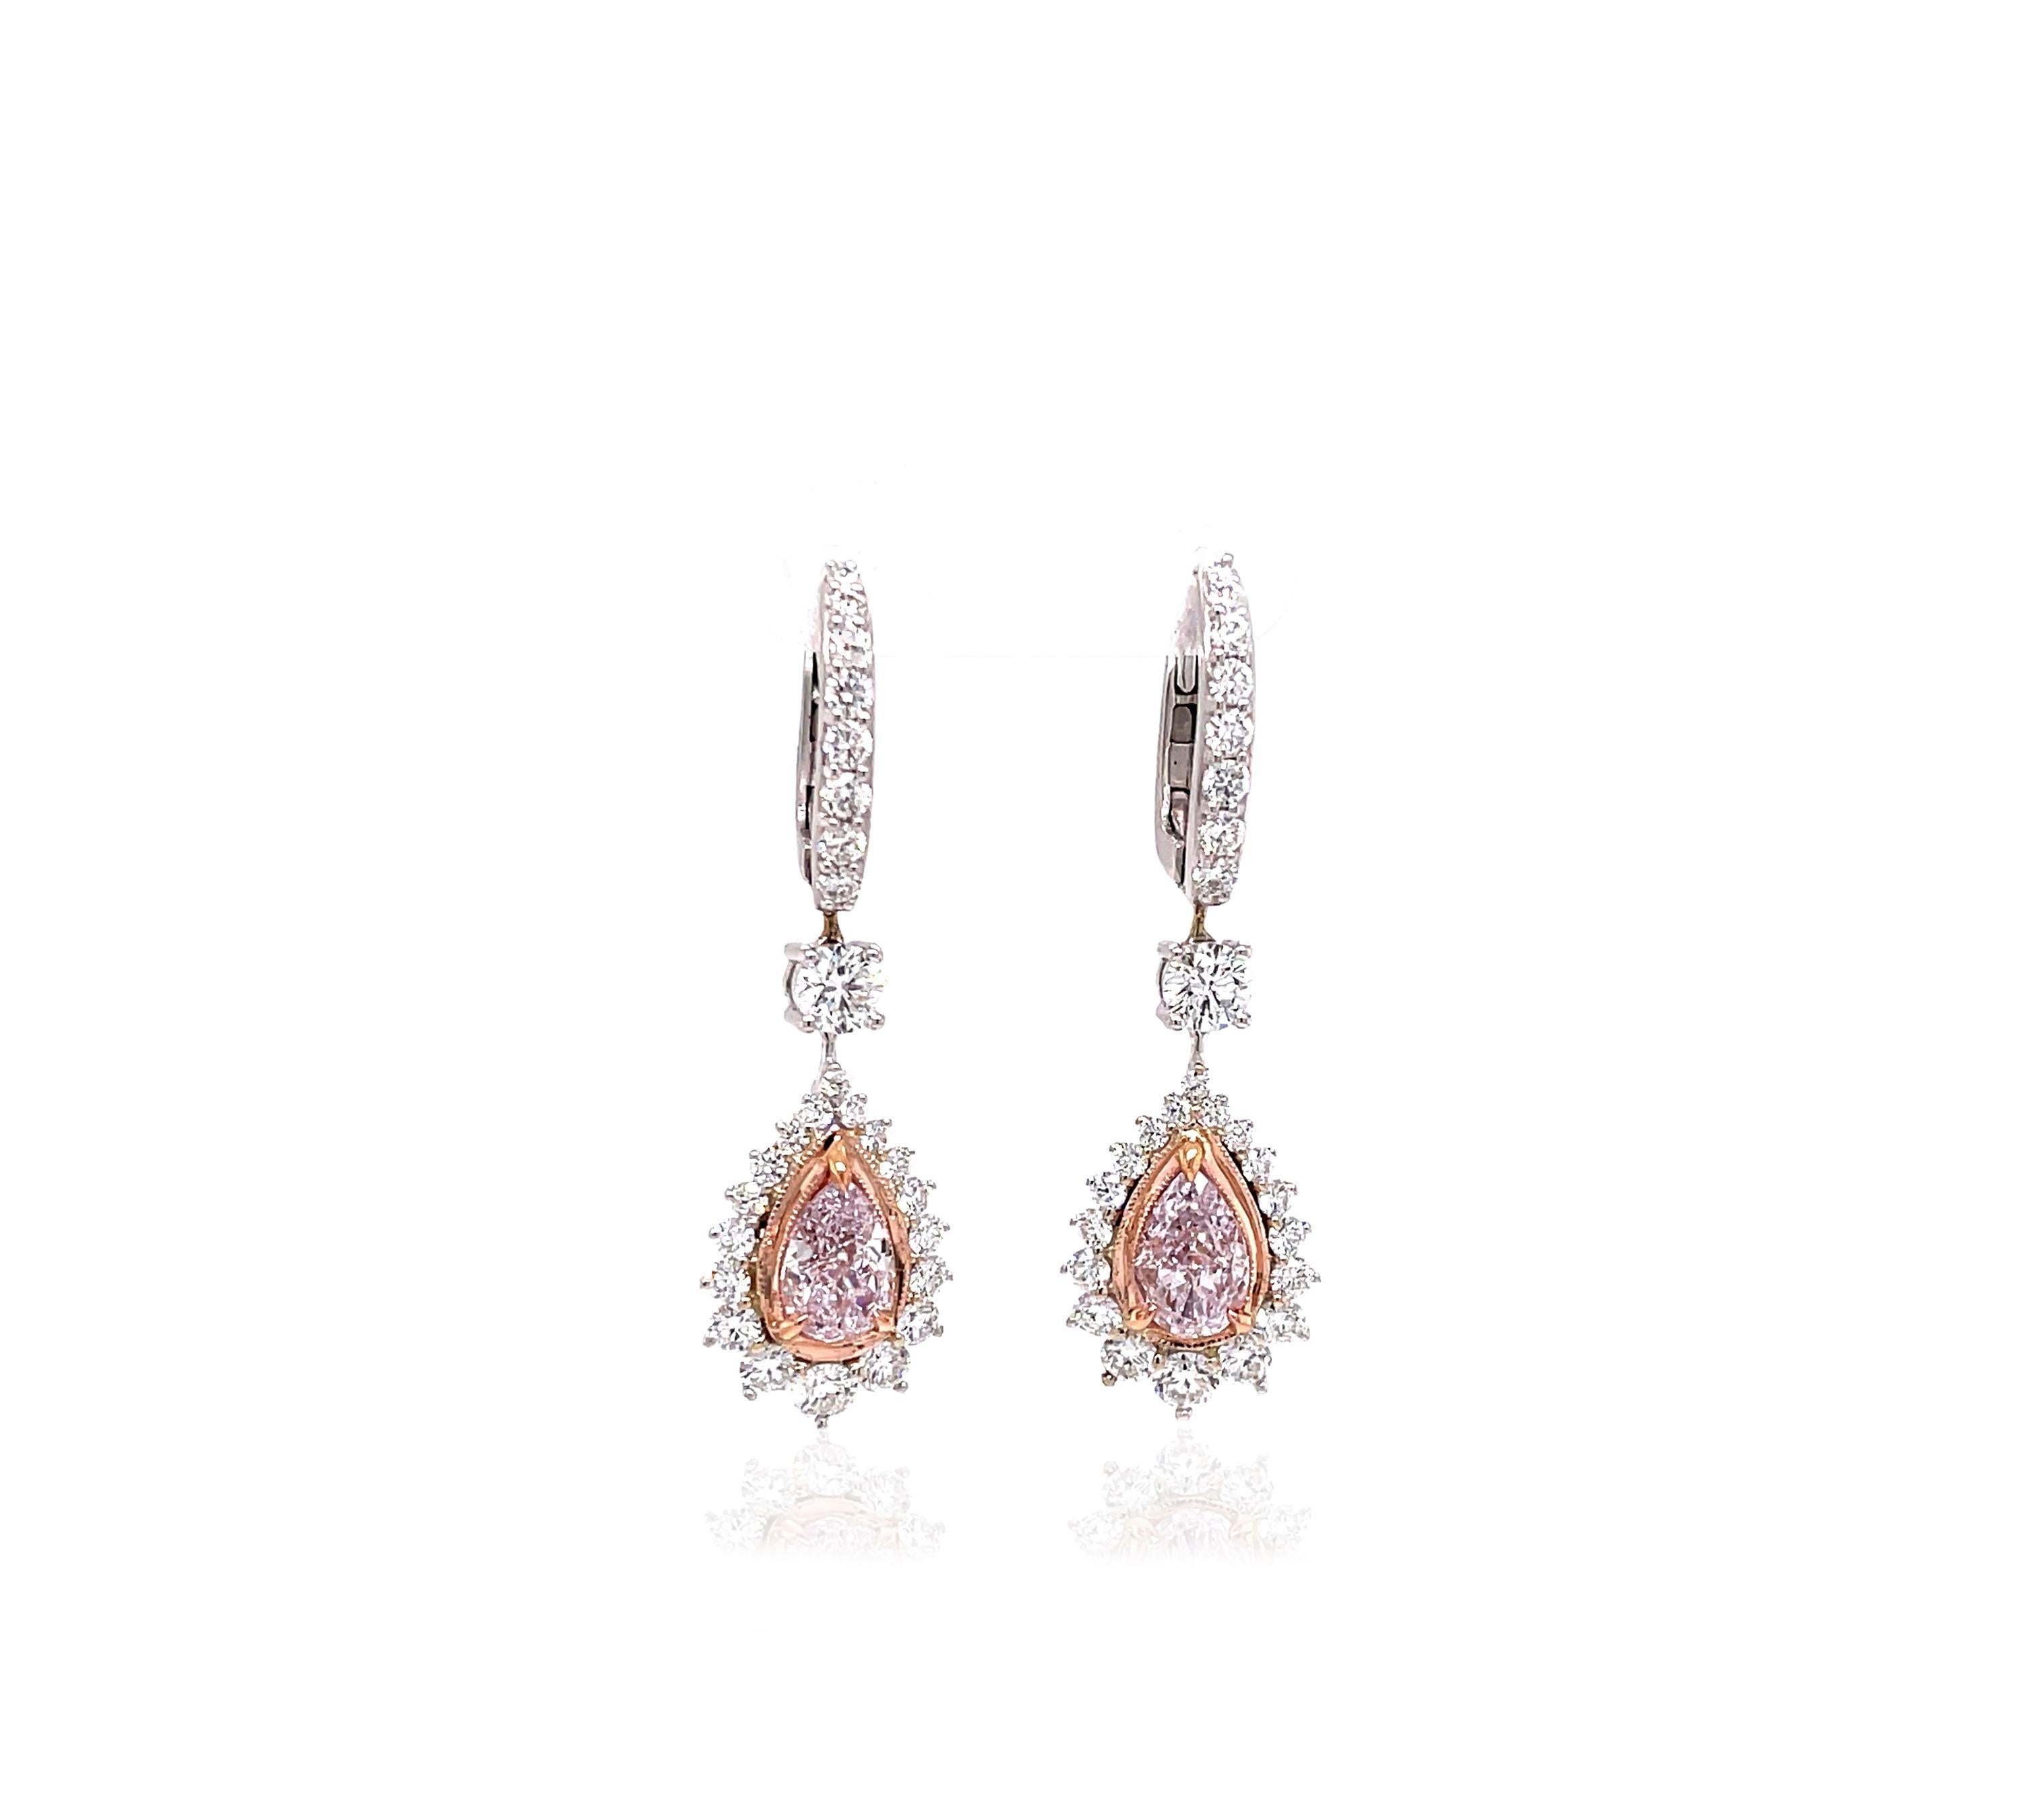 Victorian 2 Carat Light Pink Diamond Drop Earrings, GIA Certified, Set In 18k White Gold. For Sale